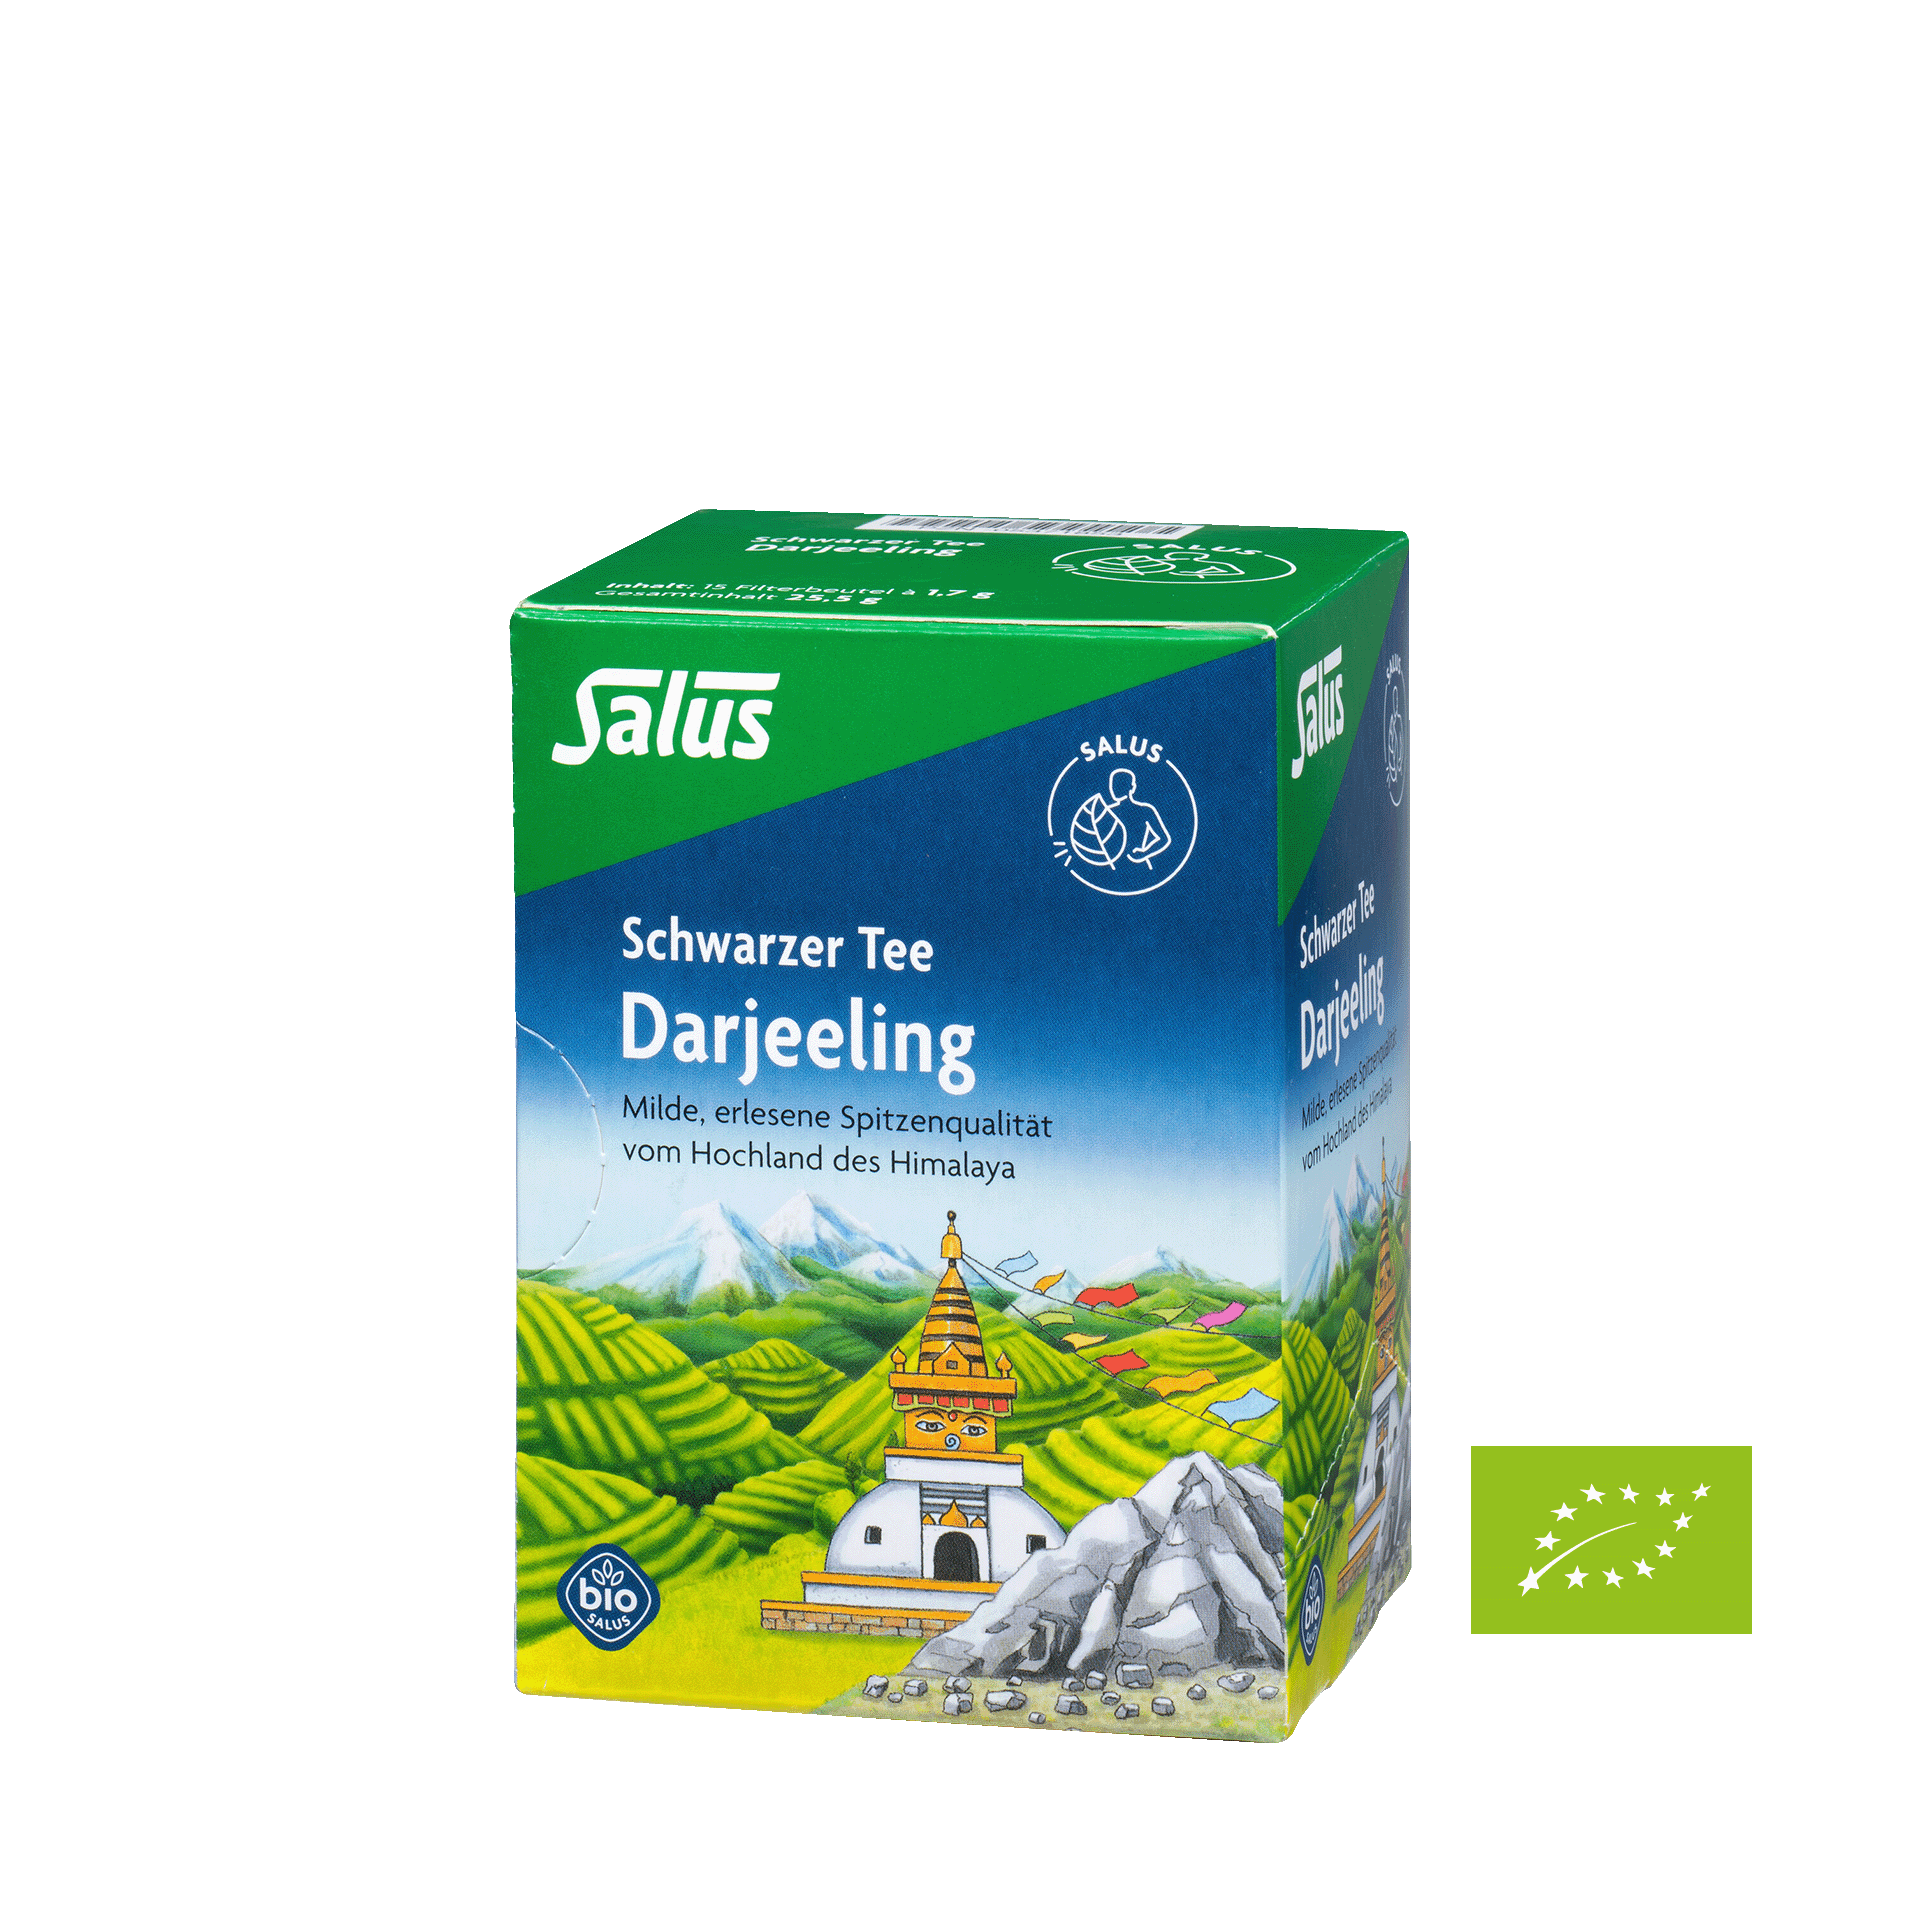 Darjeeling Schwarzer Tee, 15 Filterbeutel